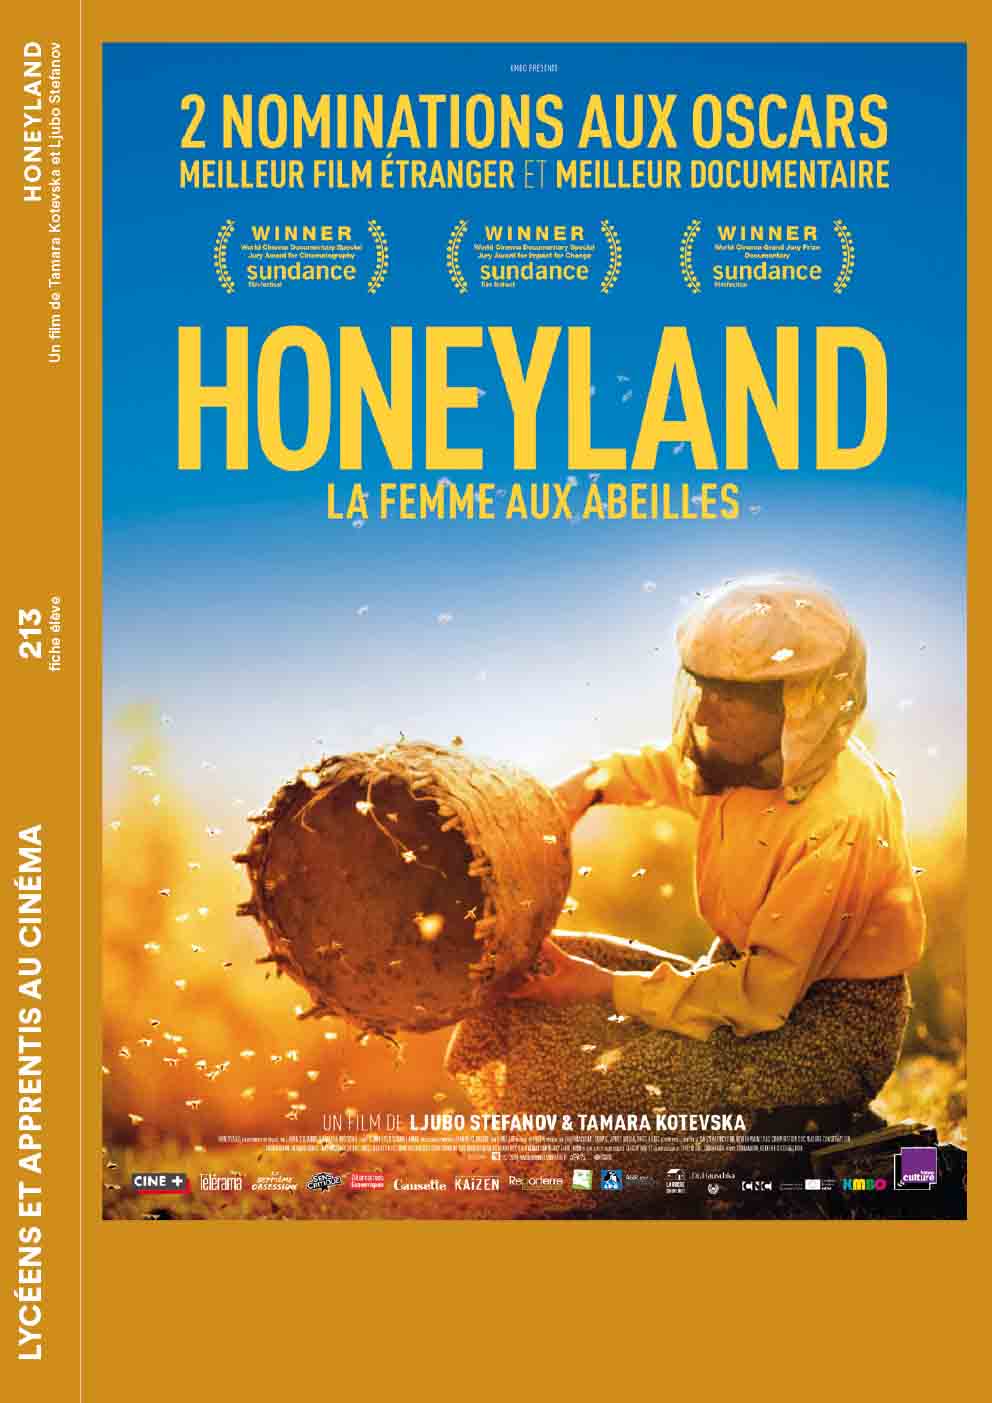 Couverture de la fiche élève du film Honeyland de Tamara Kotevska et Ljubo Stefanov